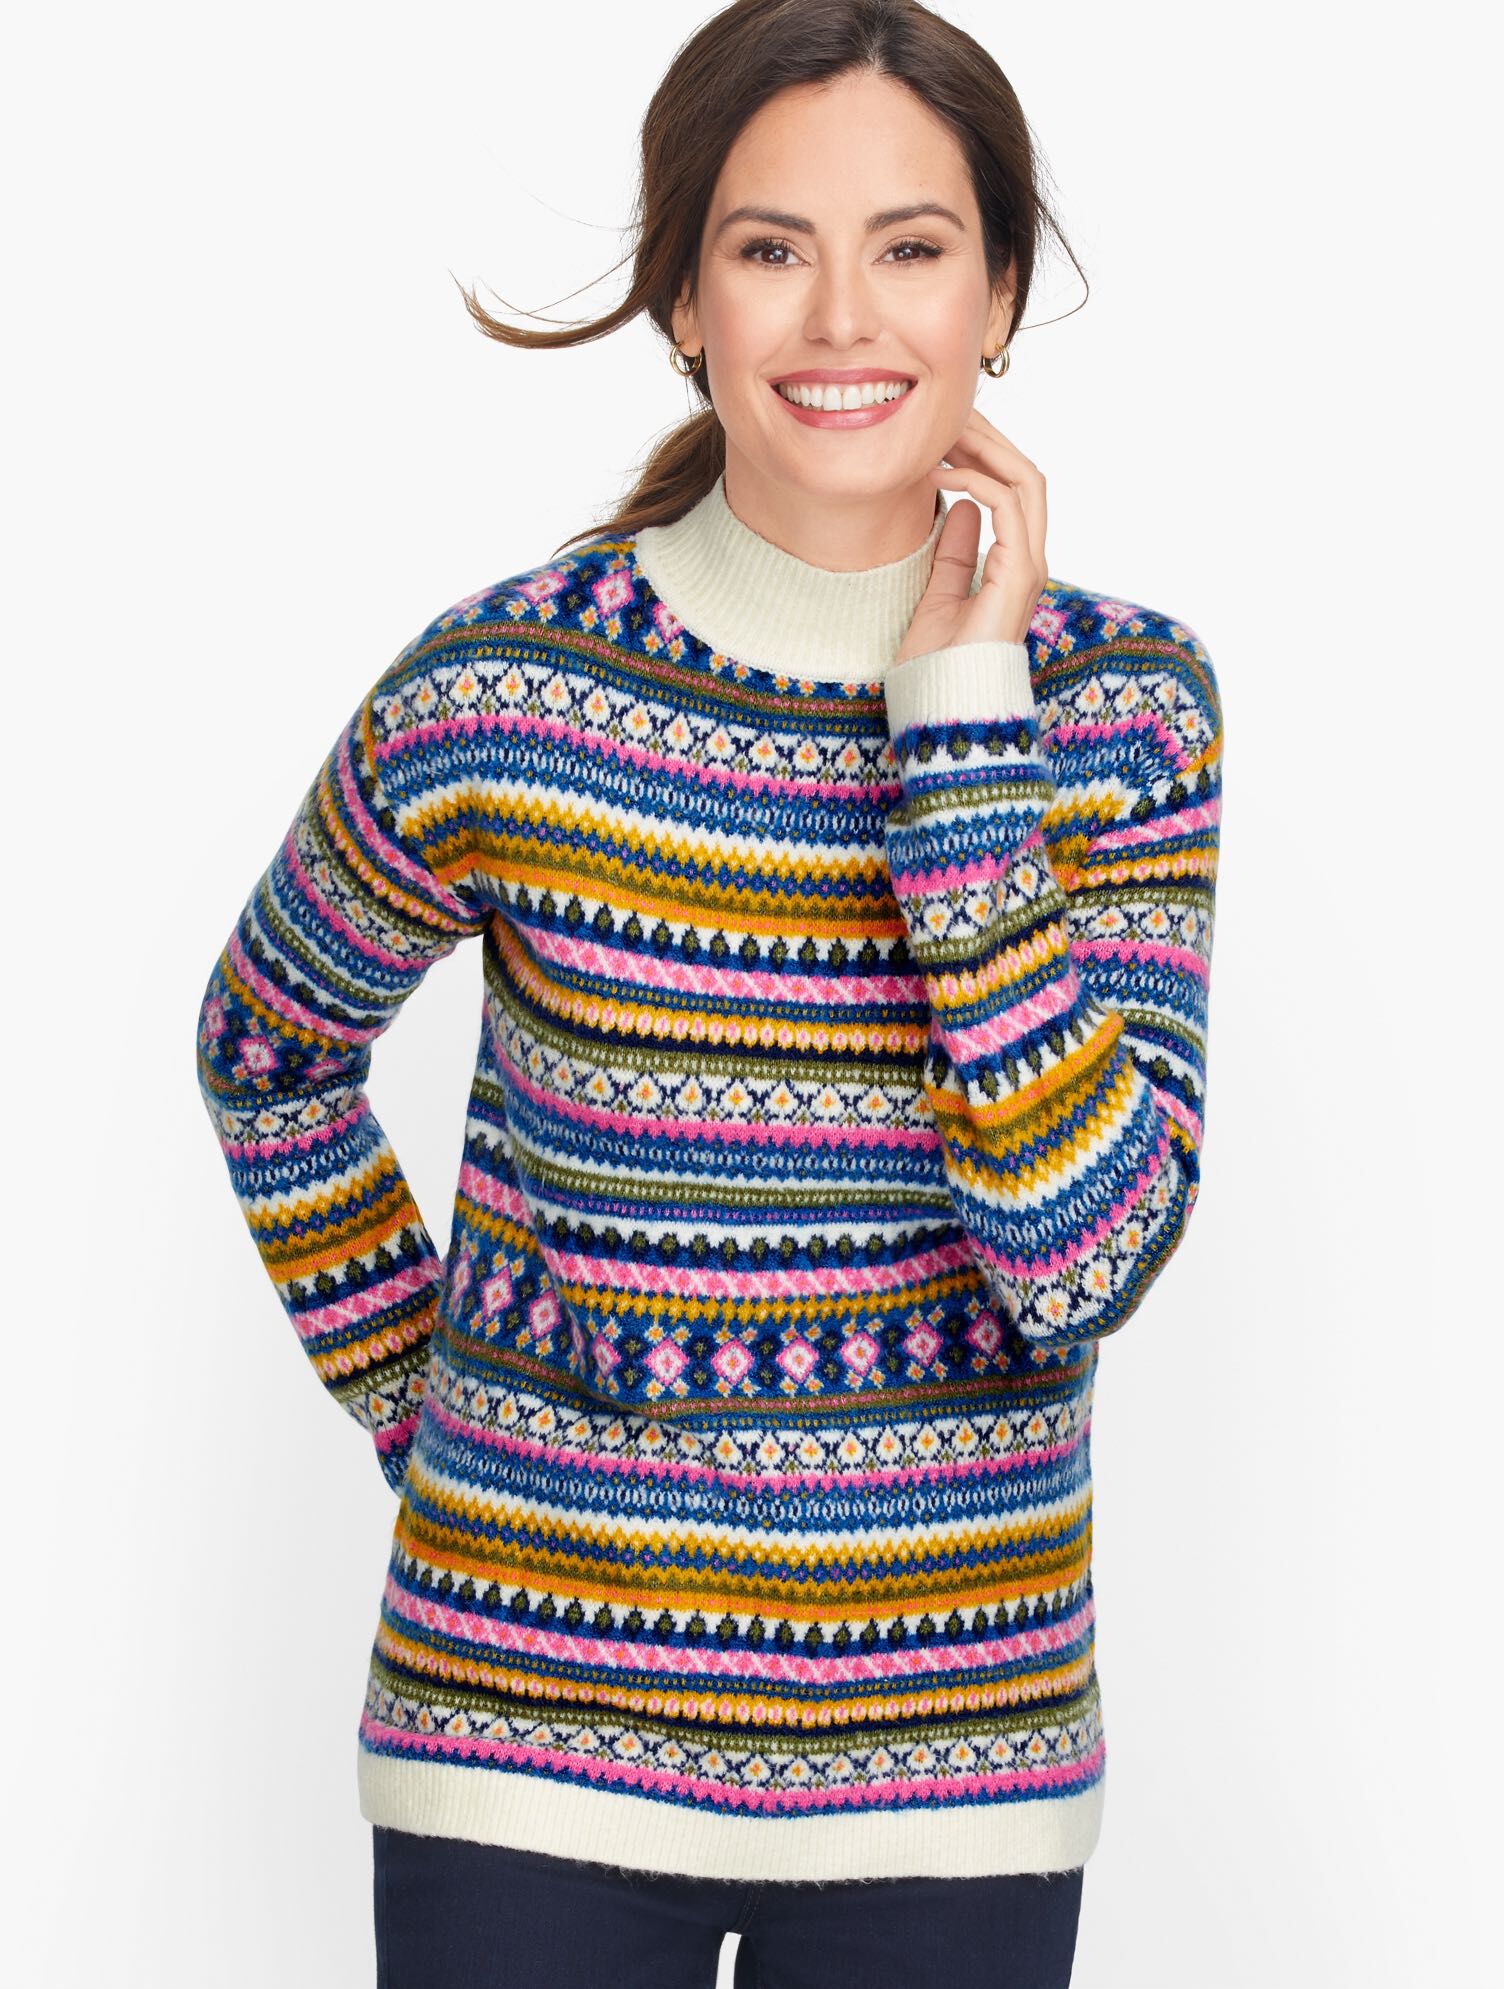 Heather Grey Sweater - Pointelle Knit Sweater - Mock Neck Sweater - Lulus